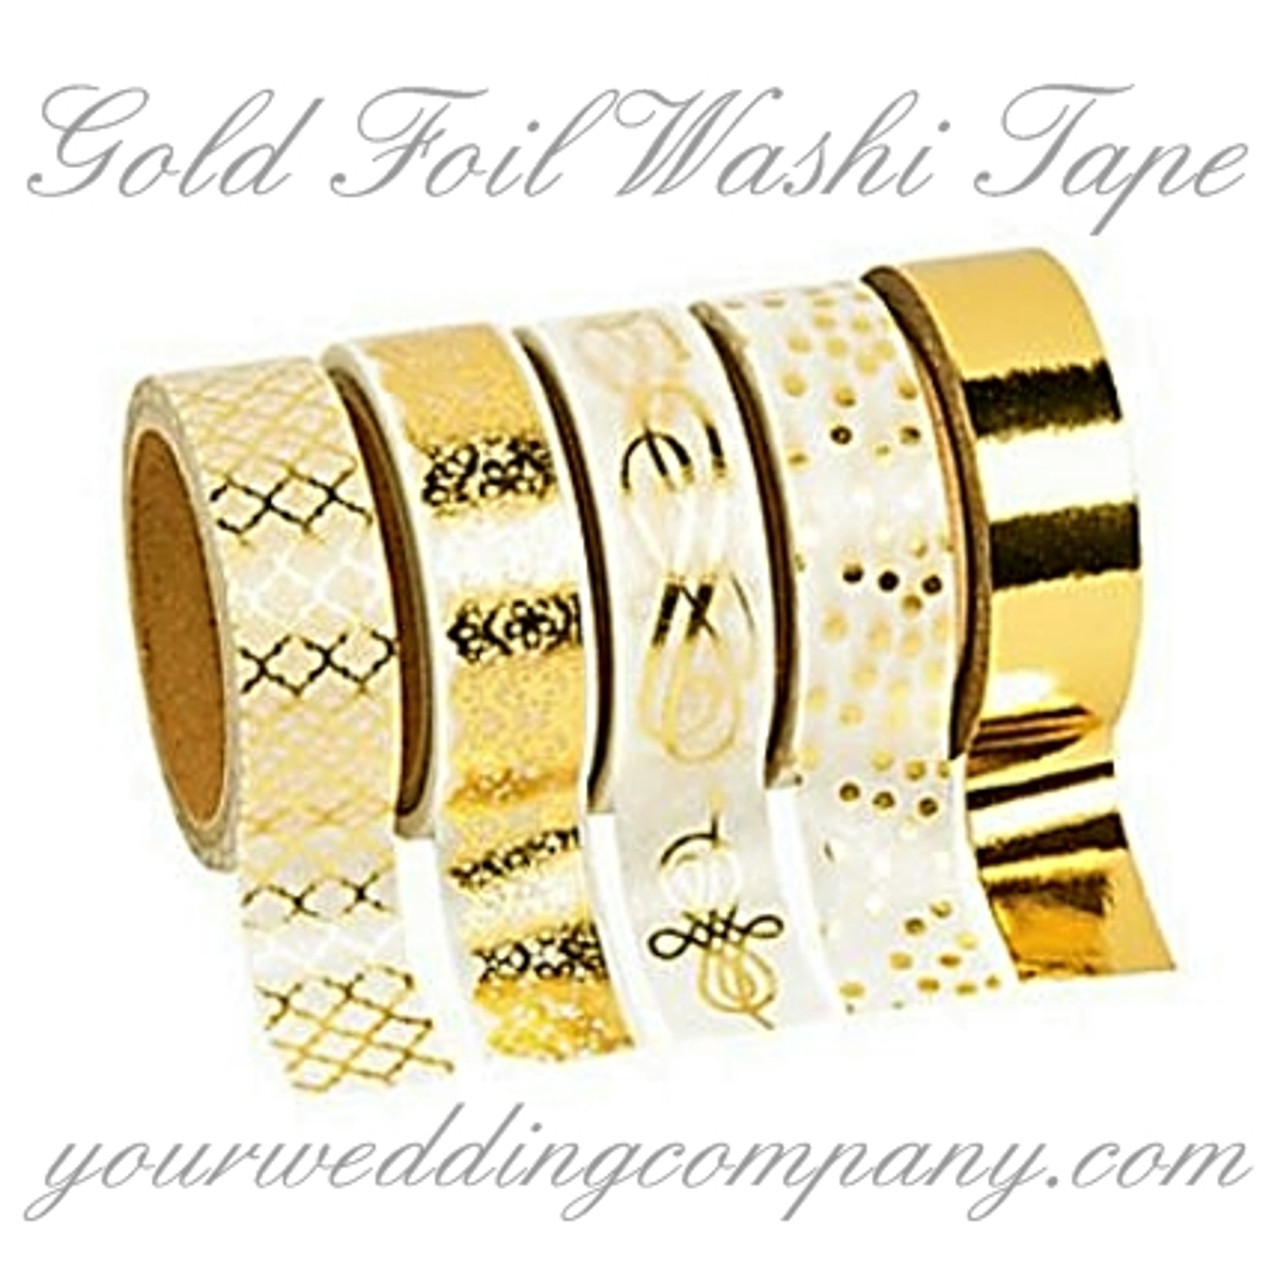 Gold Foil Washi Tape (5 Rolls)